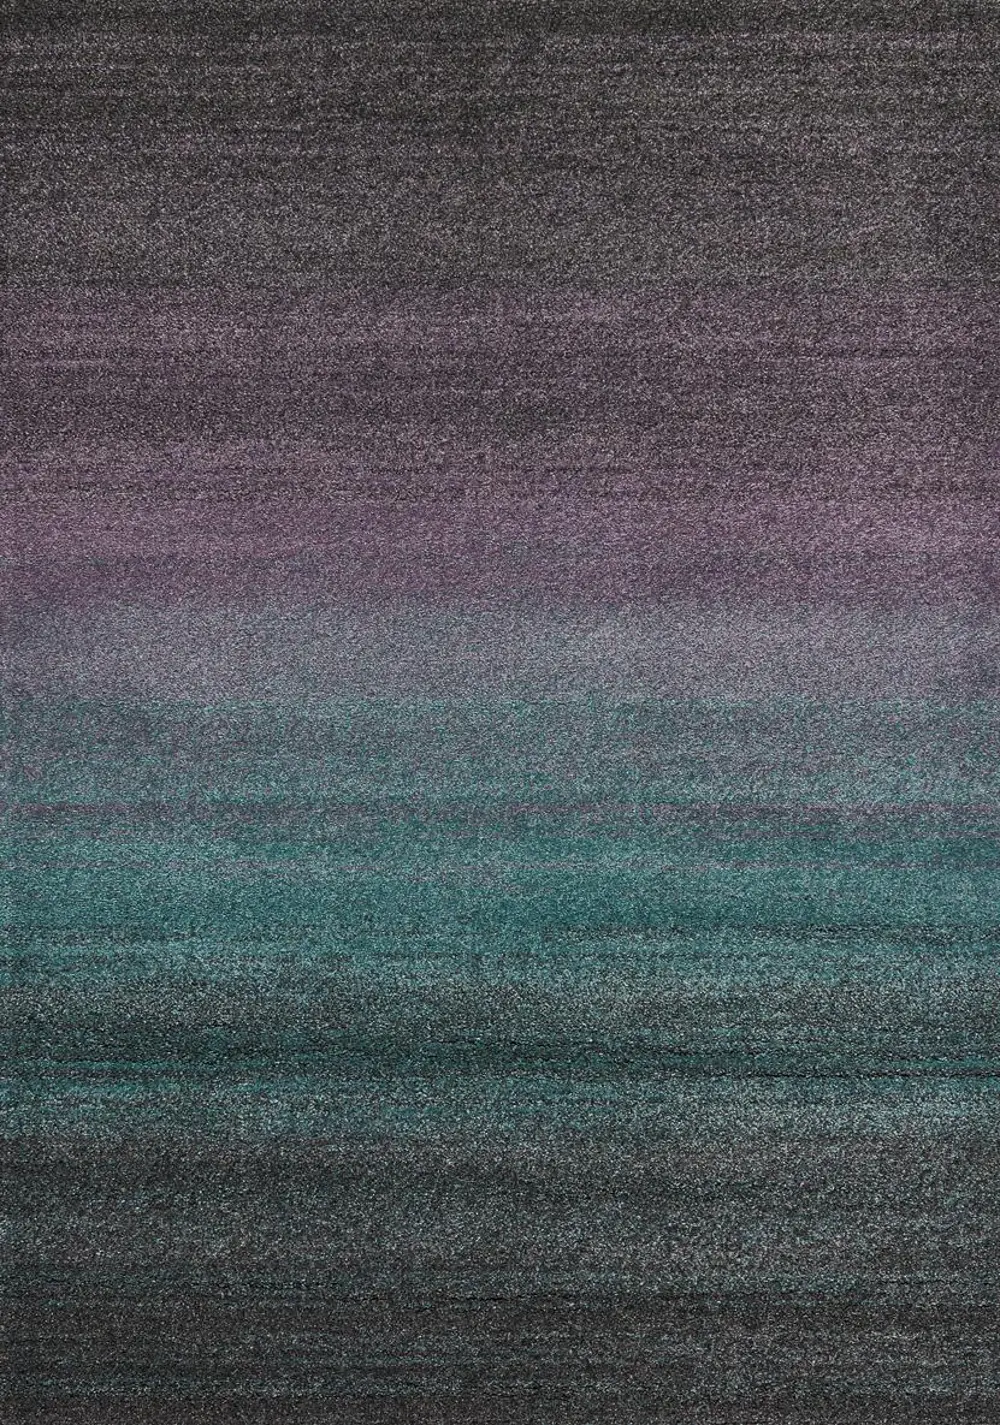 5 x 8 Medium Purple and Gray Area Rug - Ashbury-1